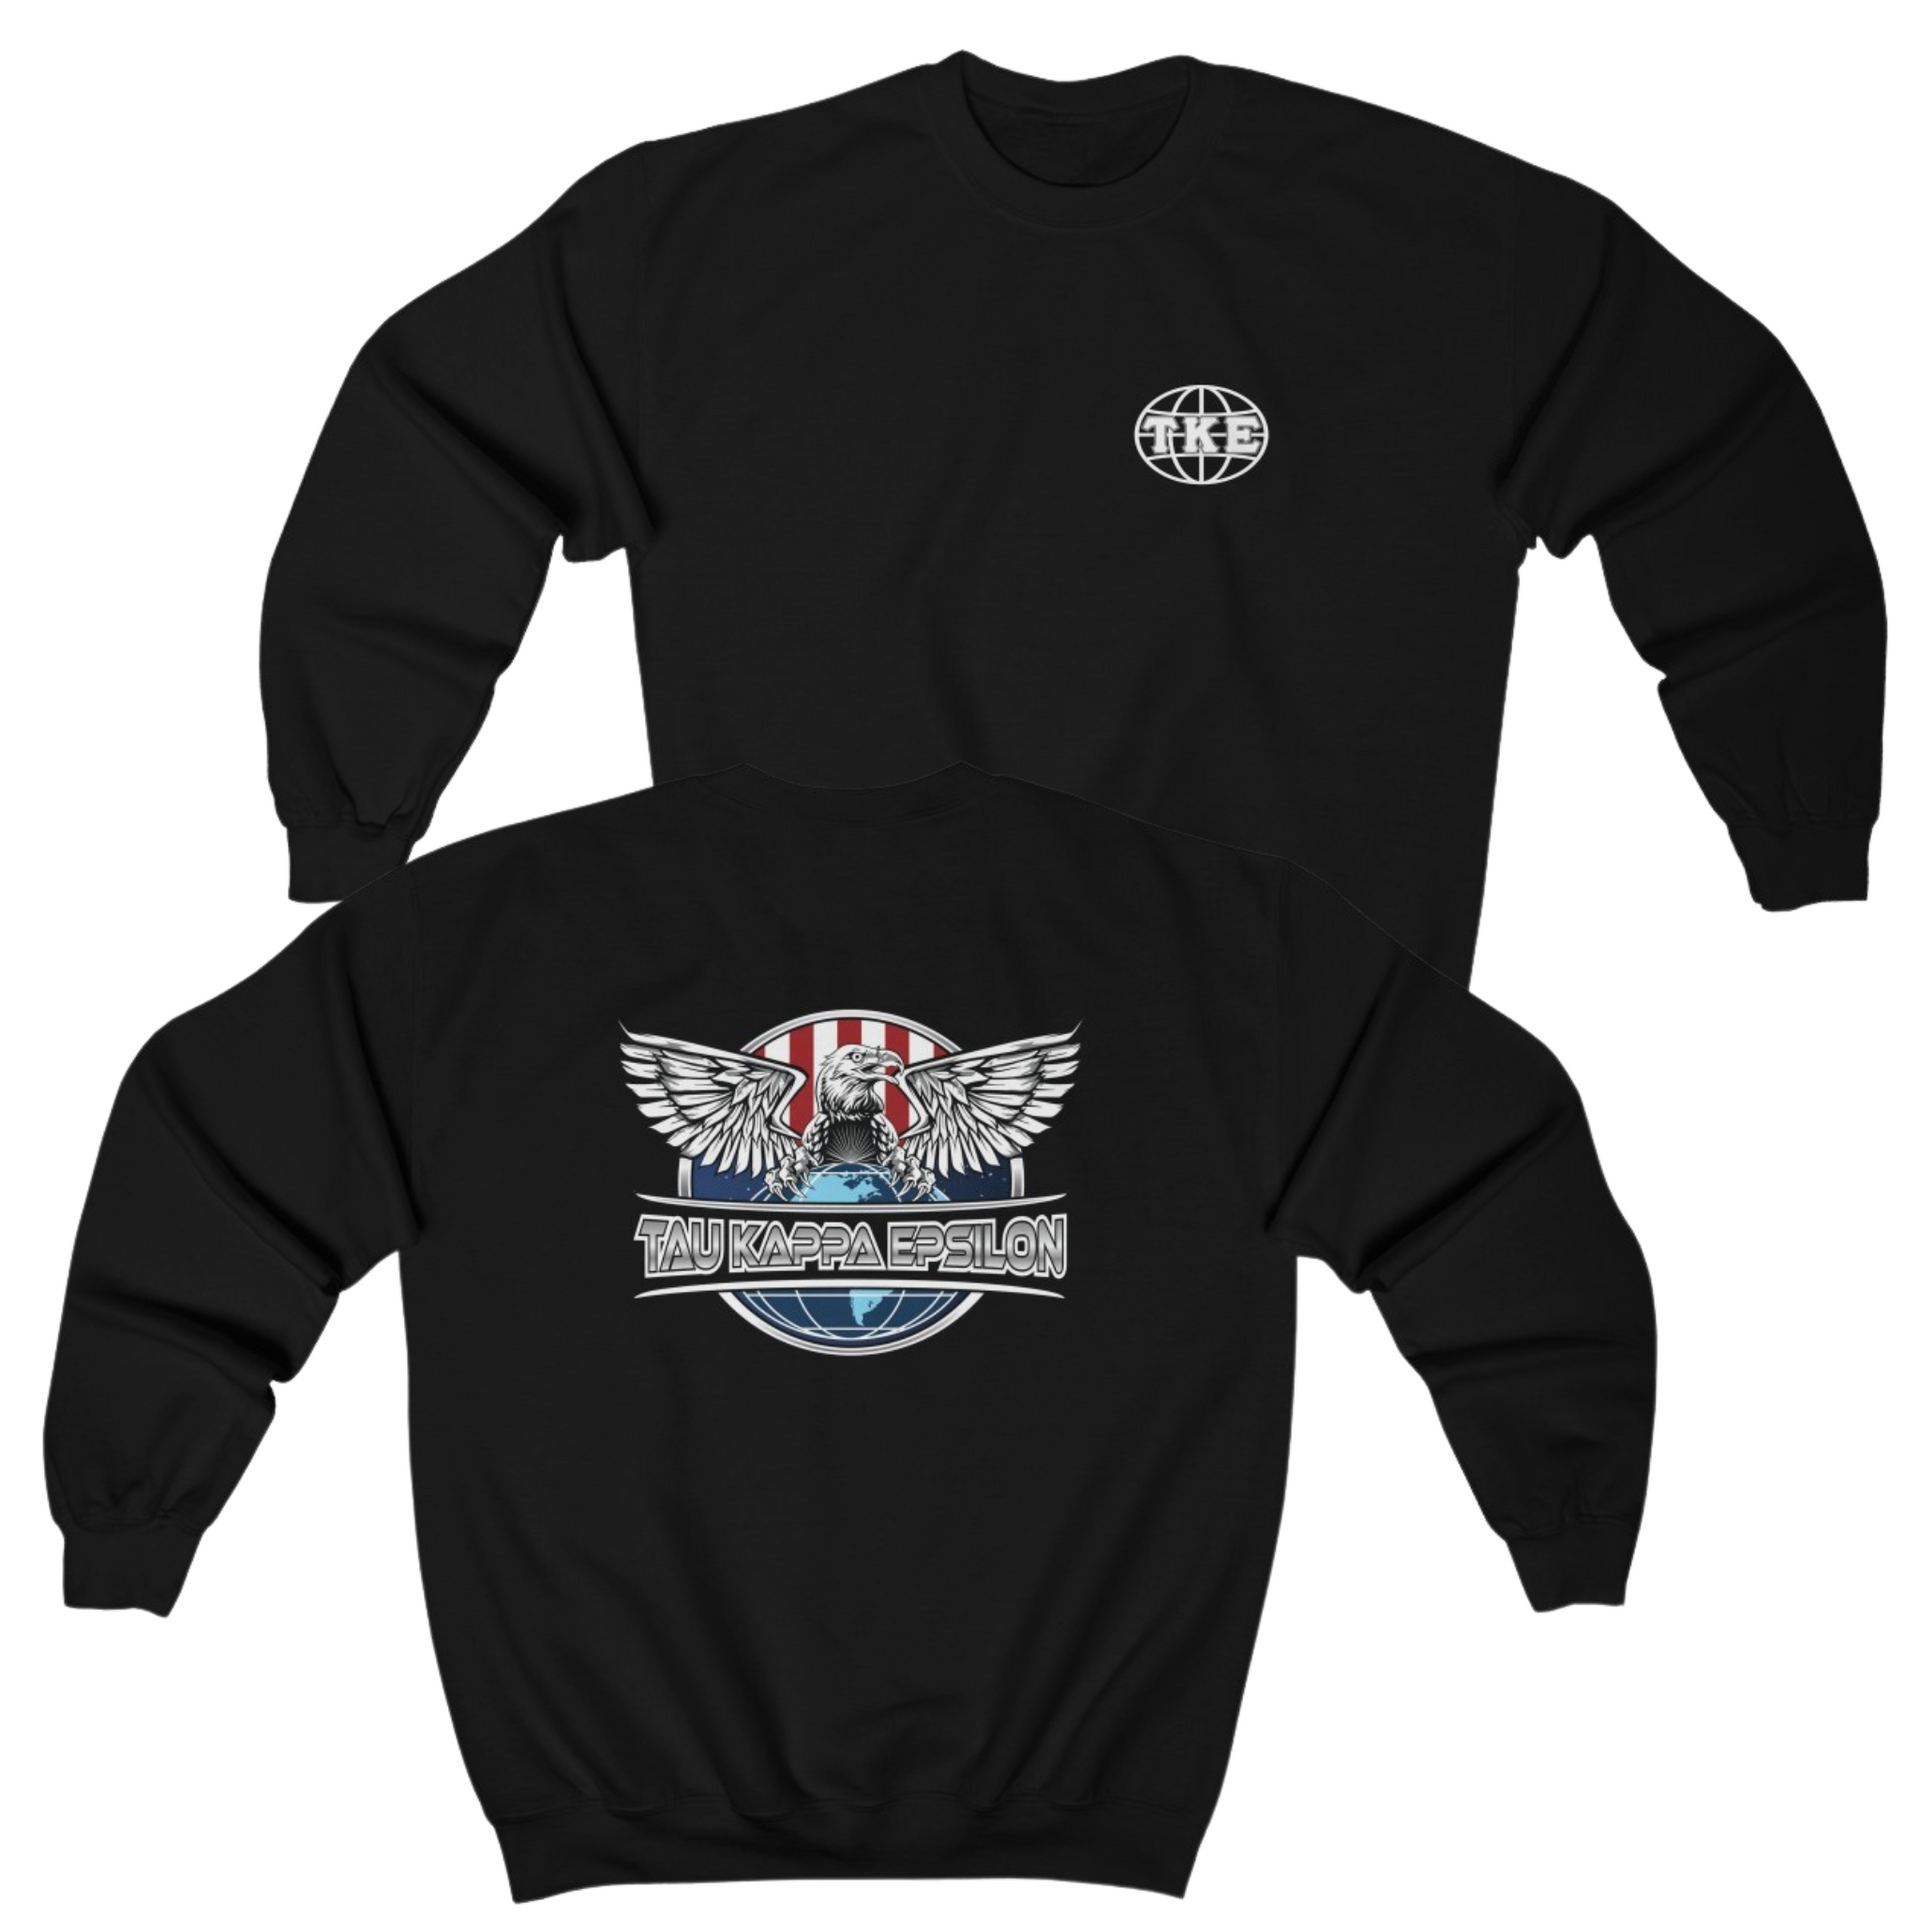 Black Tau Kappa Epsilon Graphic Crewneck Sweatshirt | The Fraternal Order | Tau Kappa Epsilon Fraternity